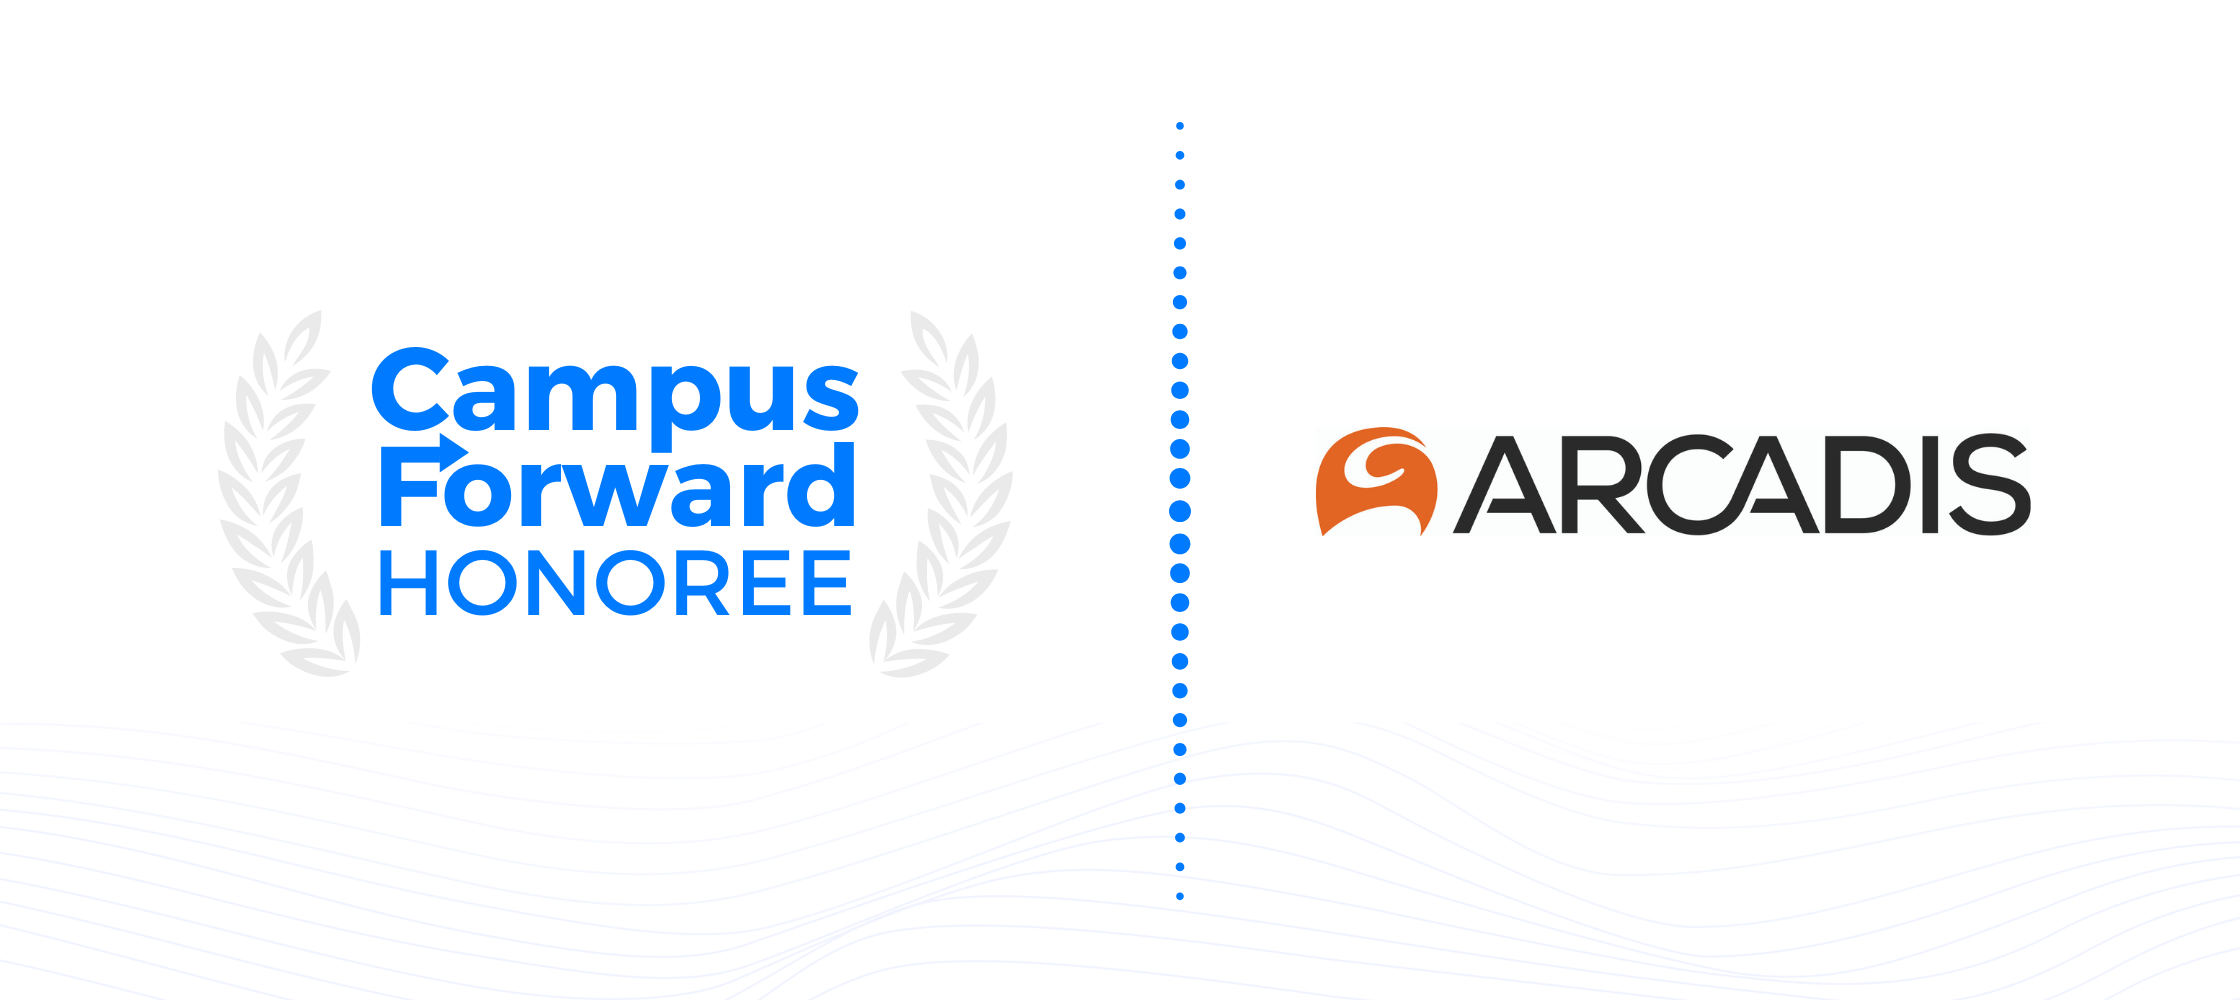 Campus Forward Honoree - Arcadis